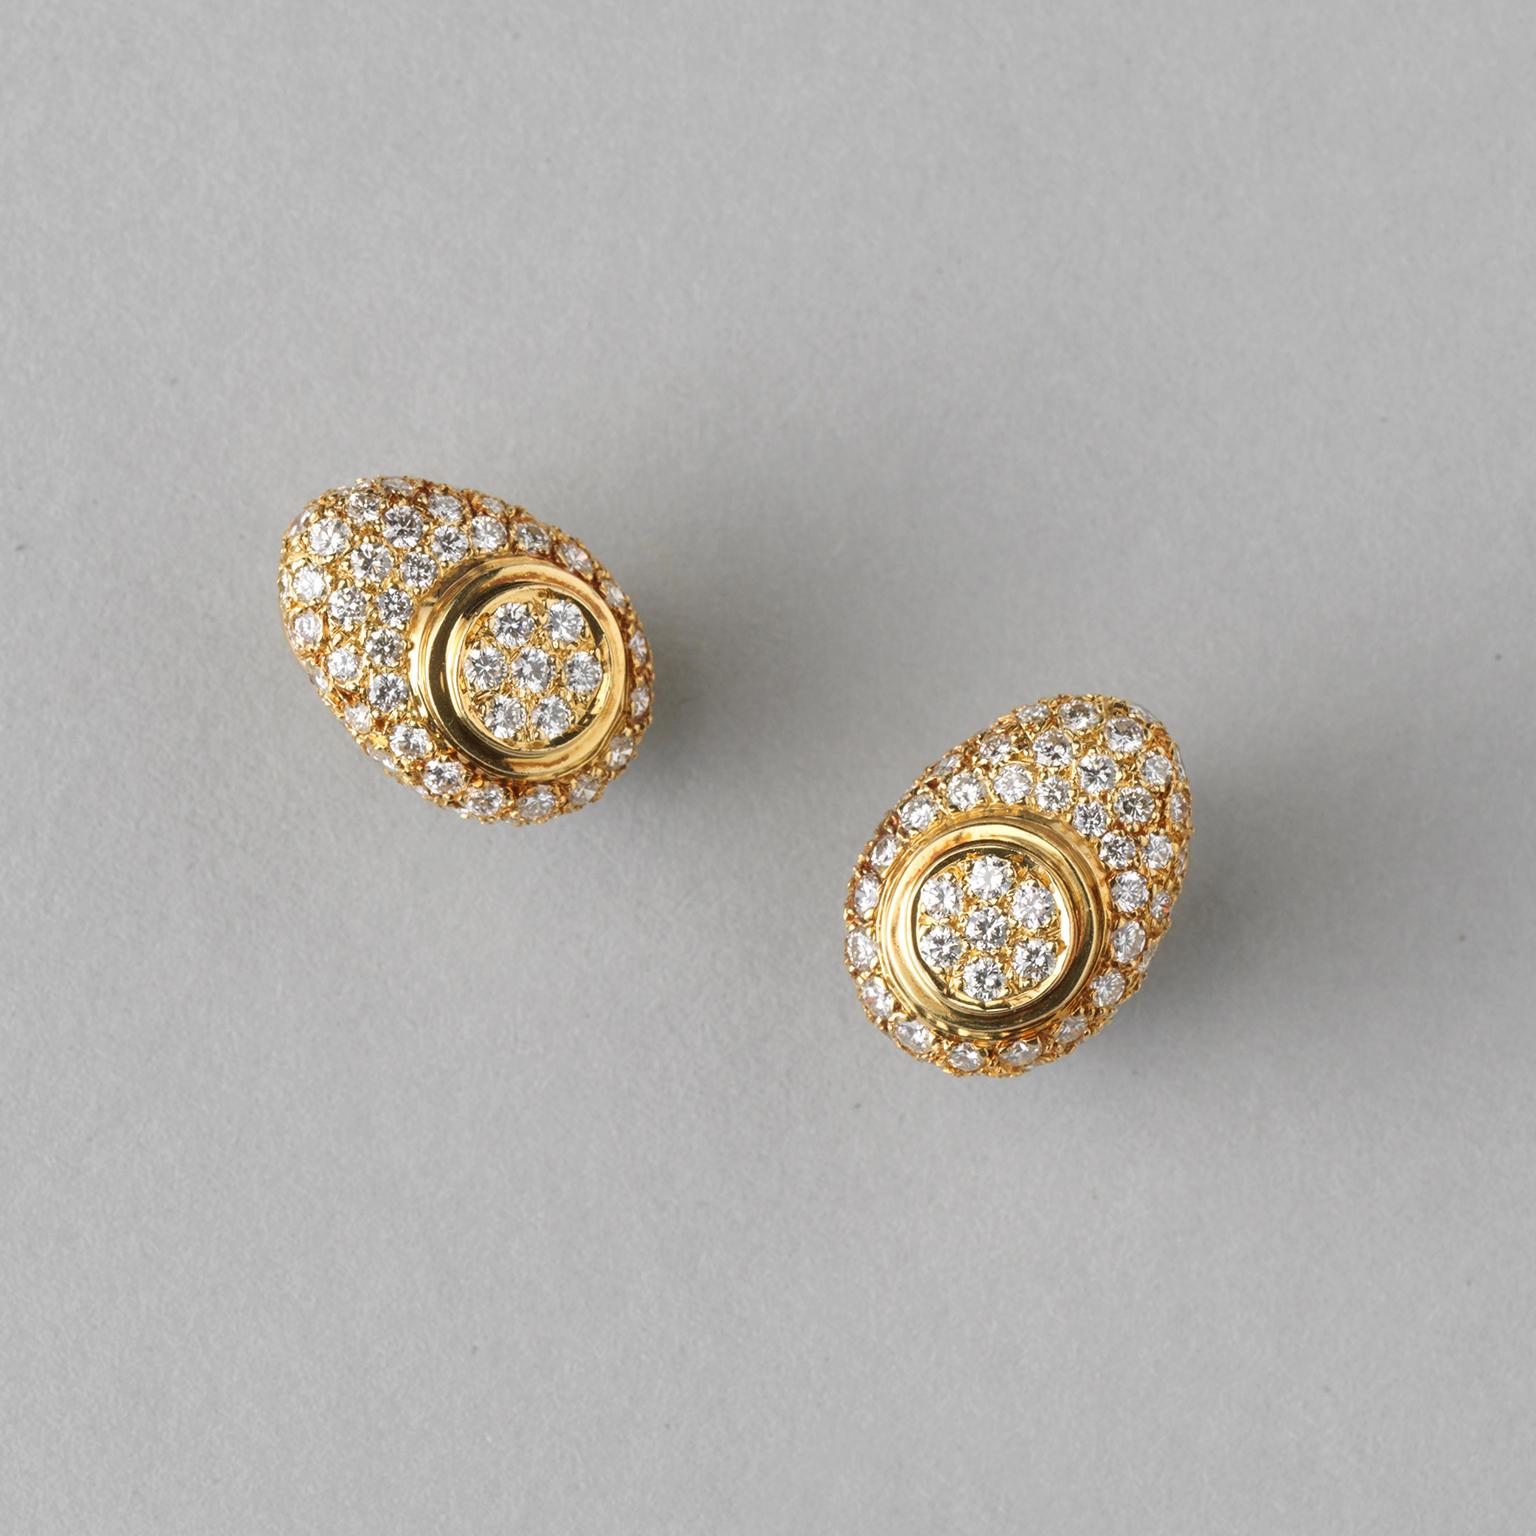 Brilliant Cut Gold and Diamond Earrings